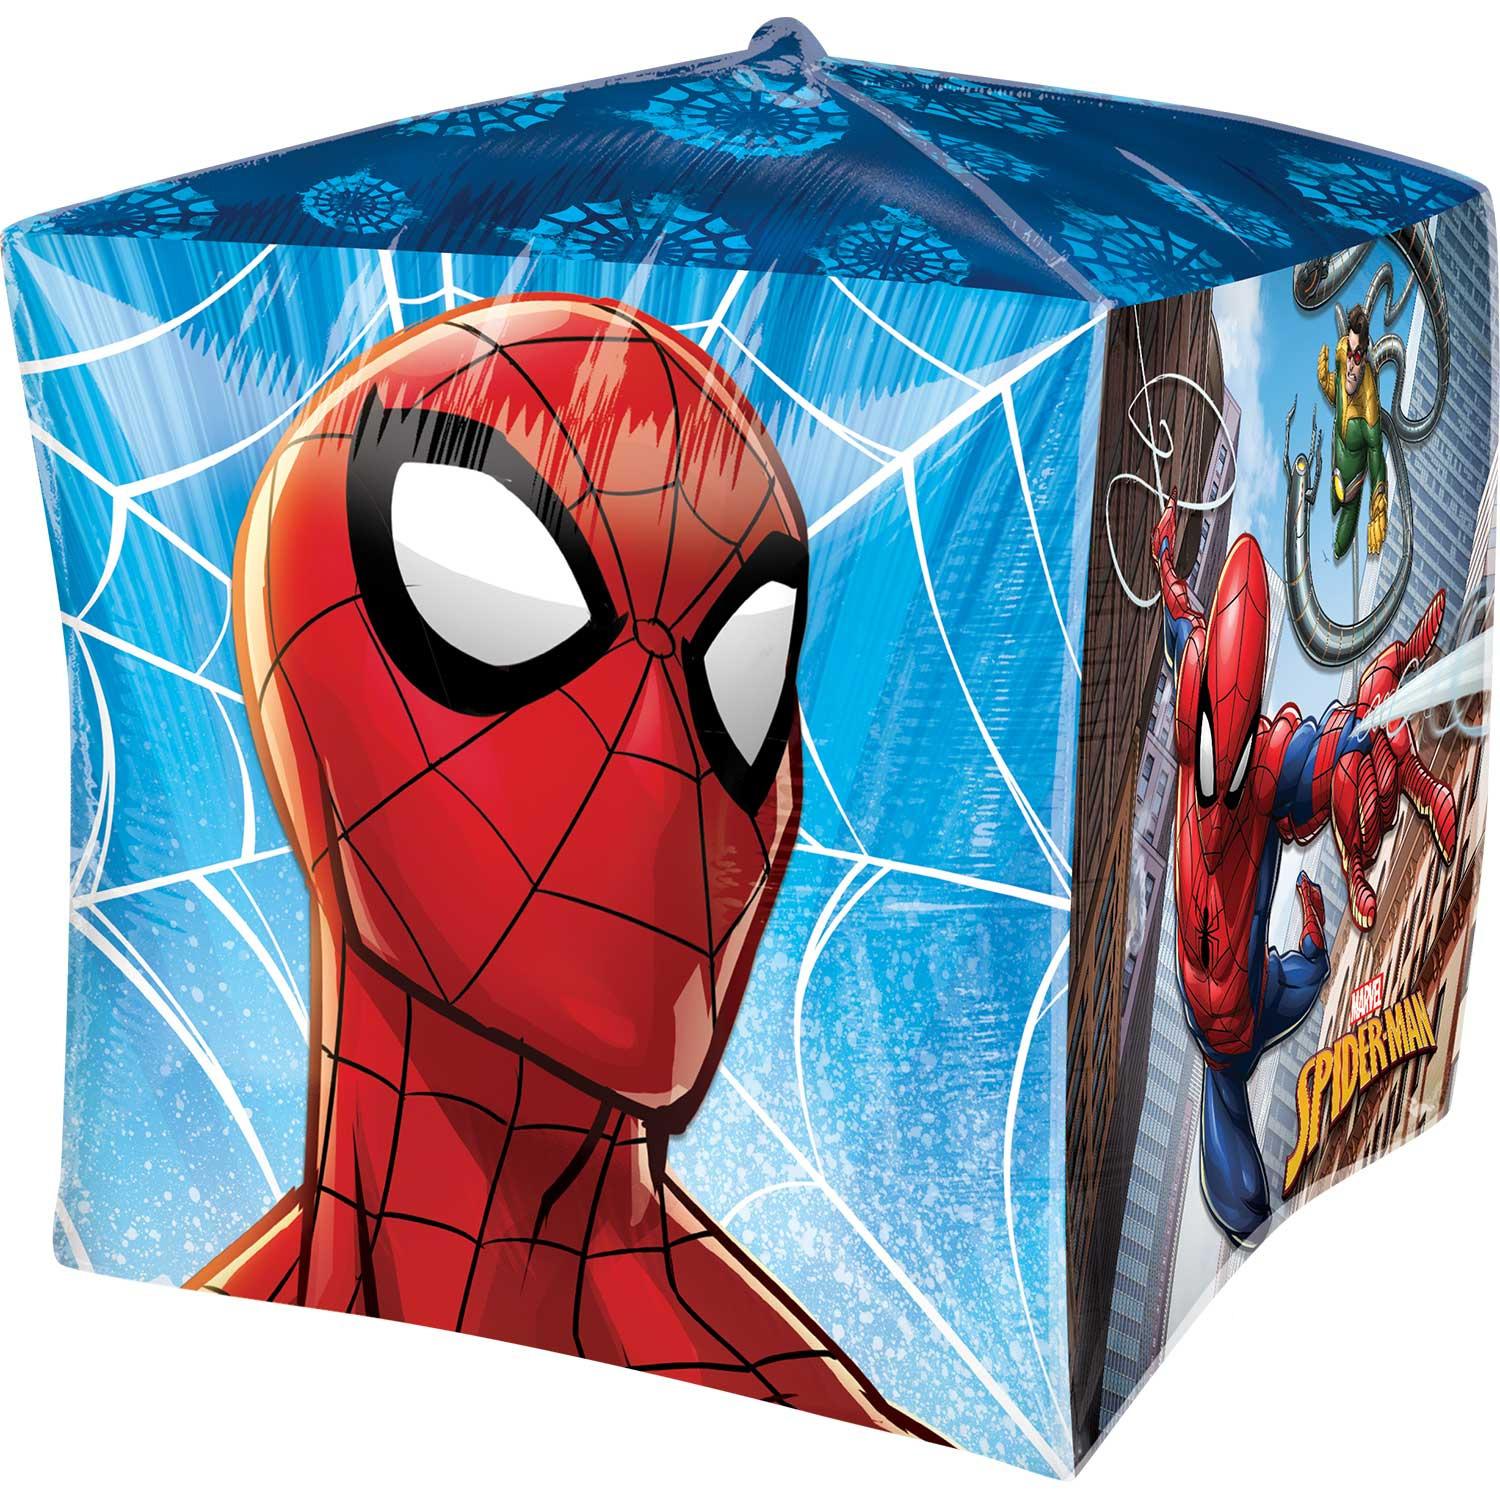 Spider-Man UltraShape Cubez Balloon 38cm Balloons & Streamers - Party Centre - Party Centre